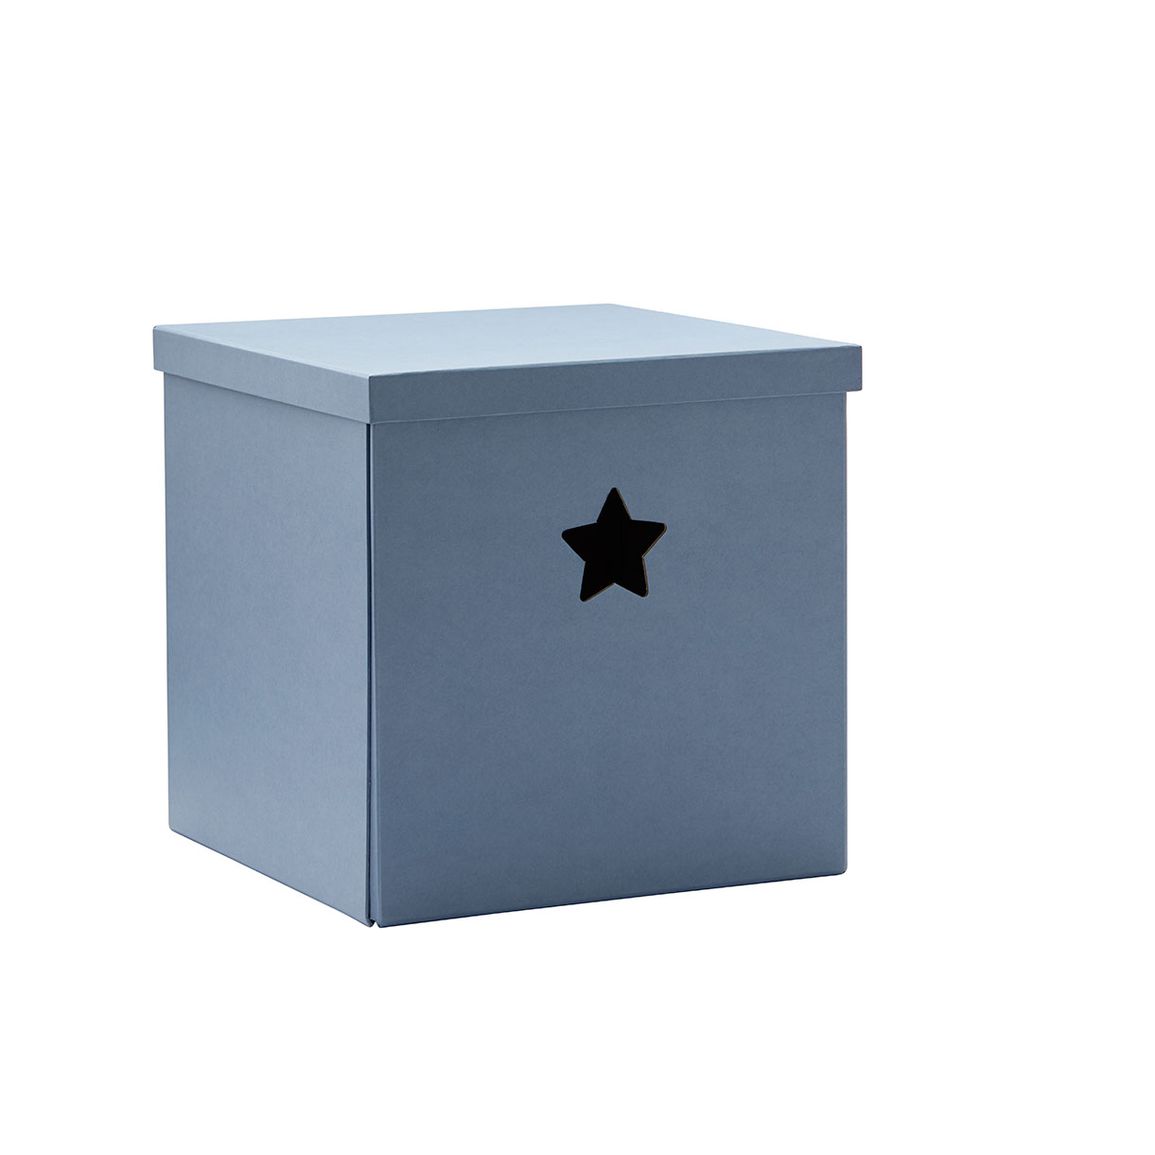 Krabica Star Blue